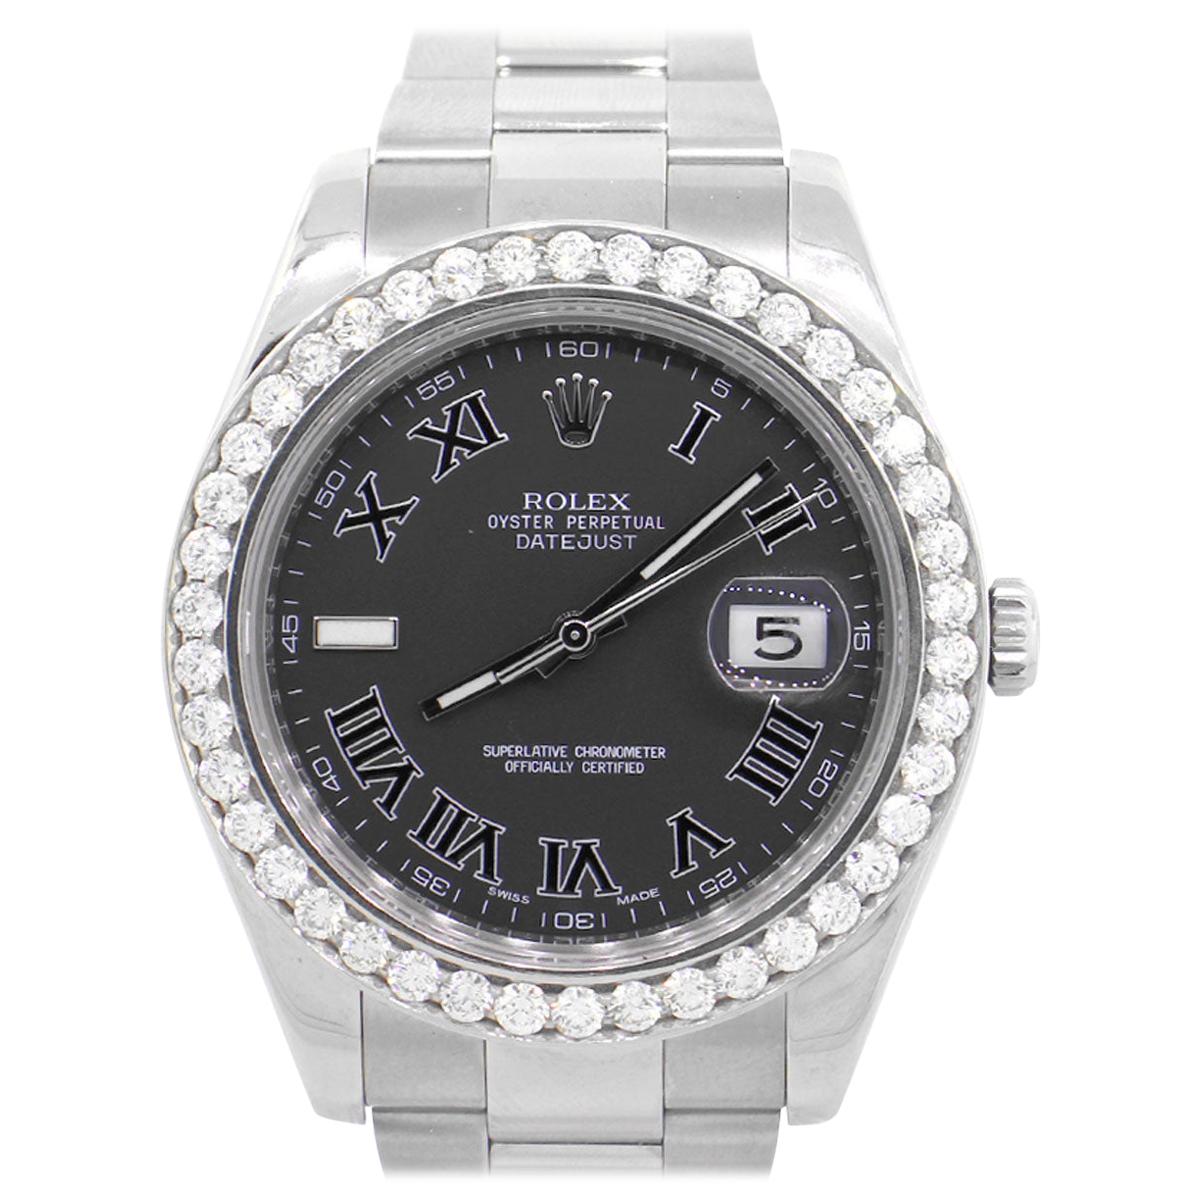 Rolex 116334 Datejust II Black Roman Dial Watch